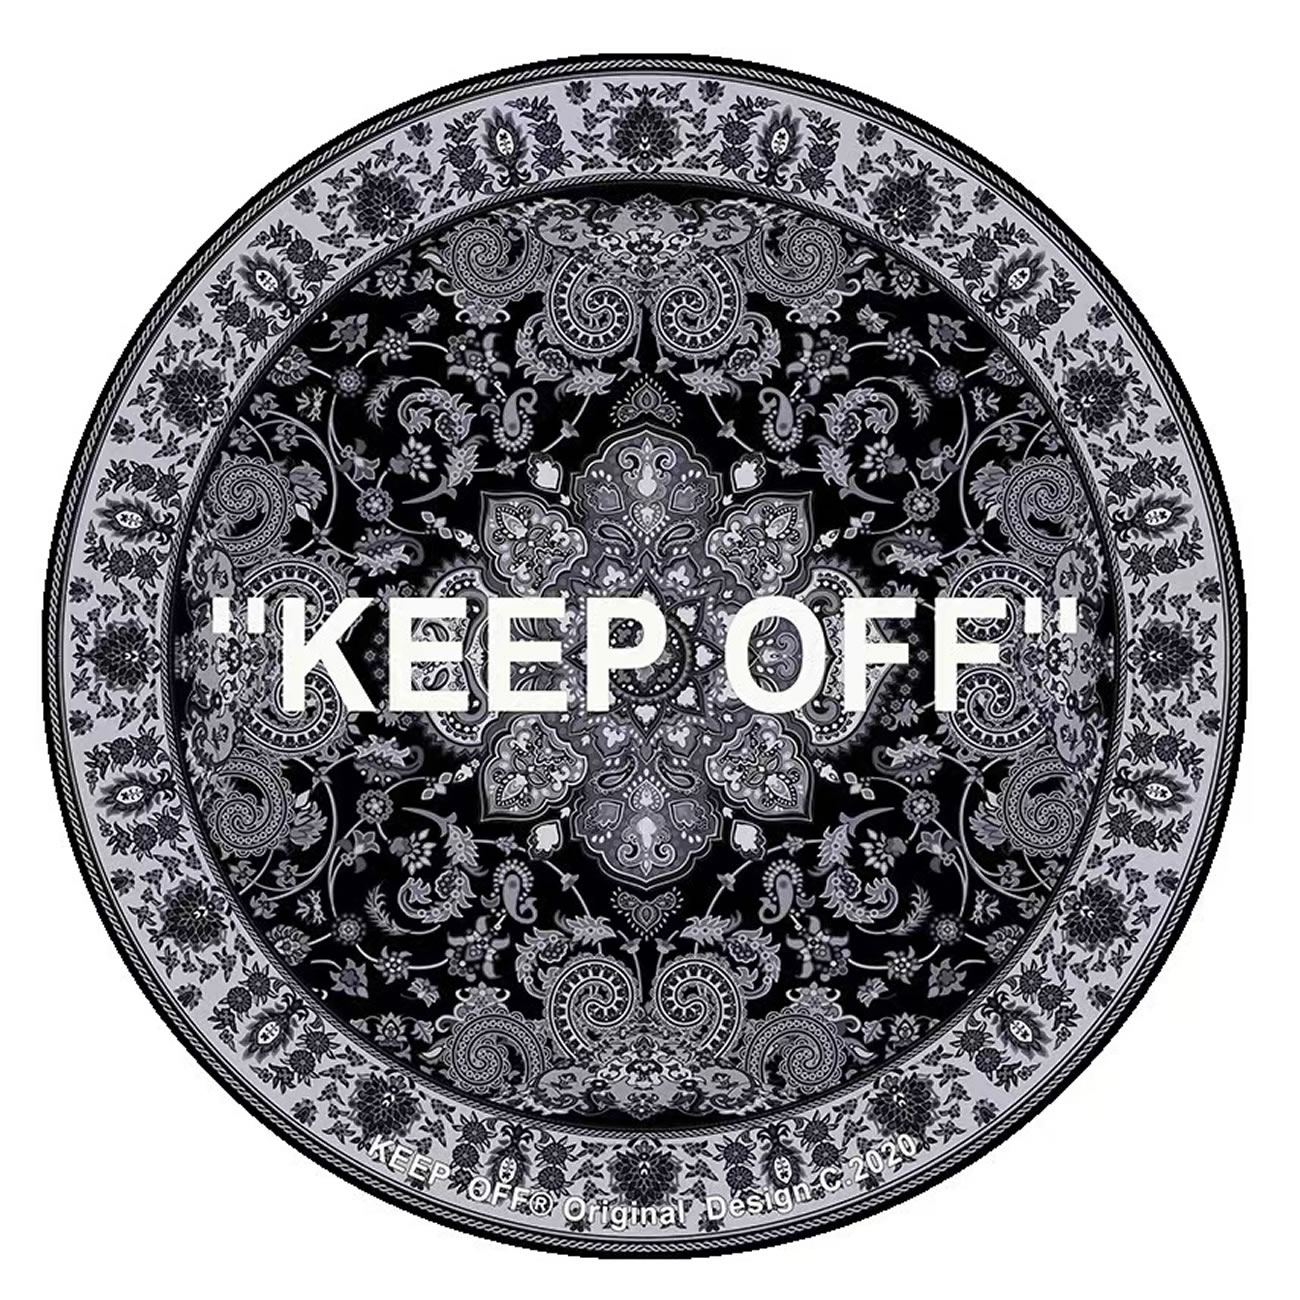 KEEP OFF Carpet Black grey